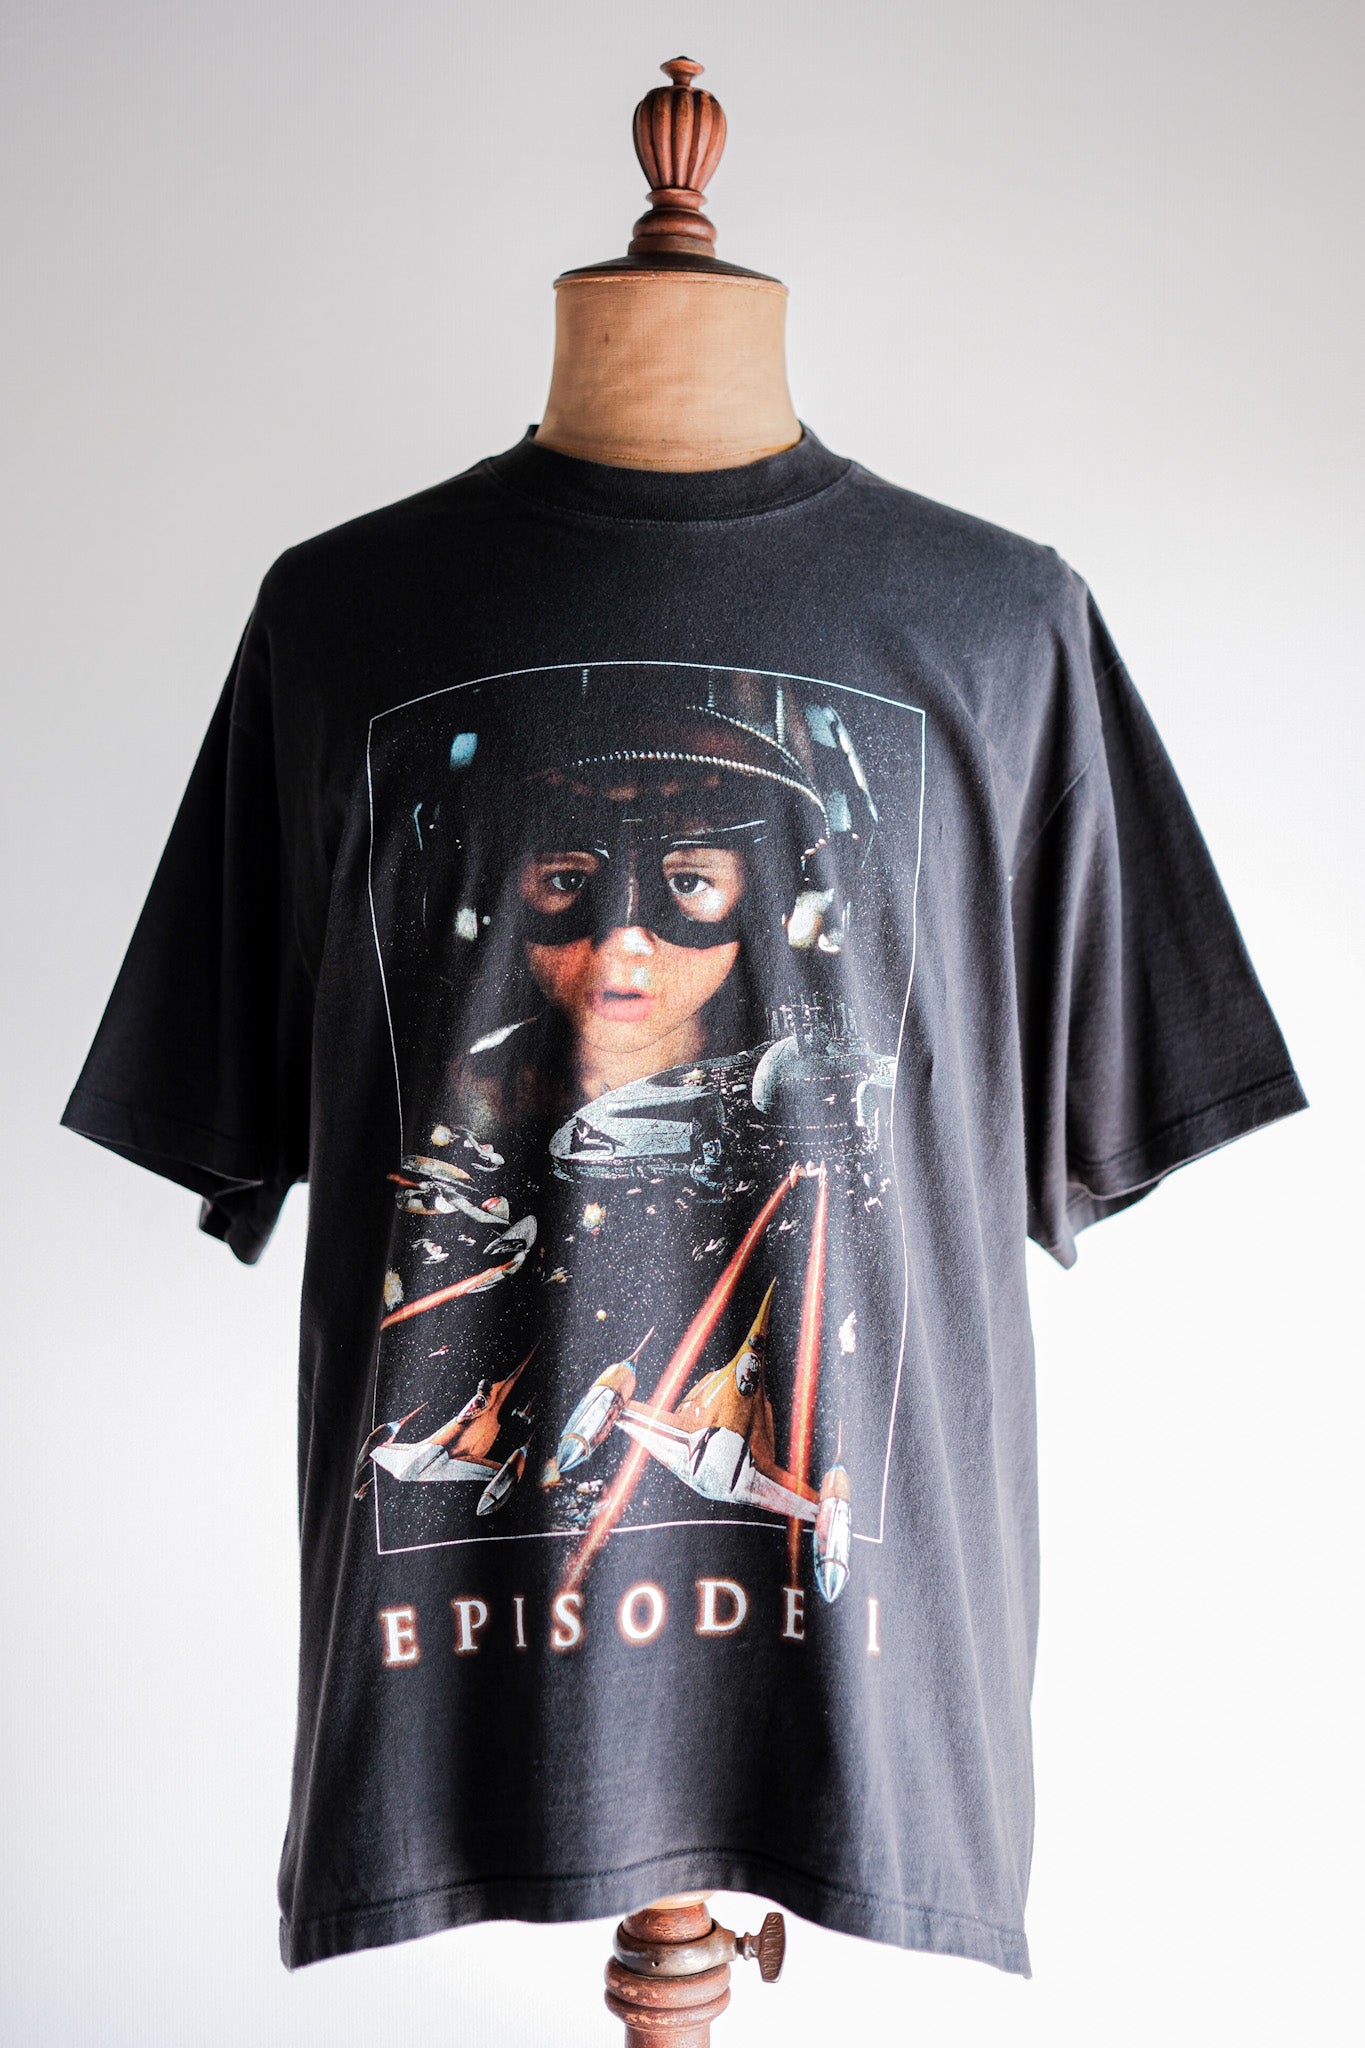 [~ 90's] Vintage Movie Print T-shirt size.xl "Star Wars Episode I"